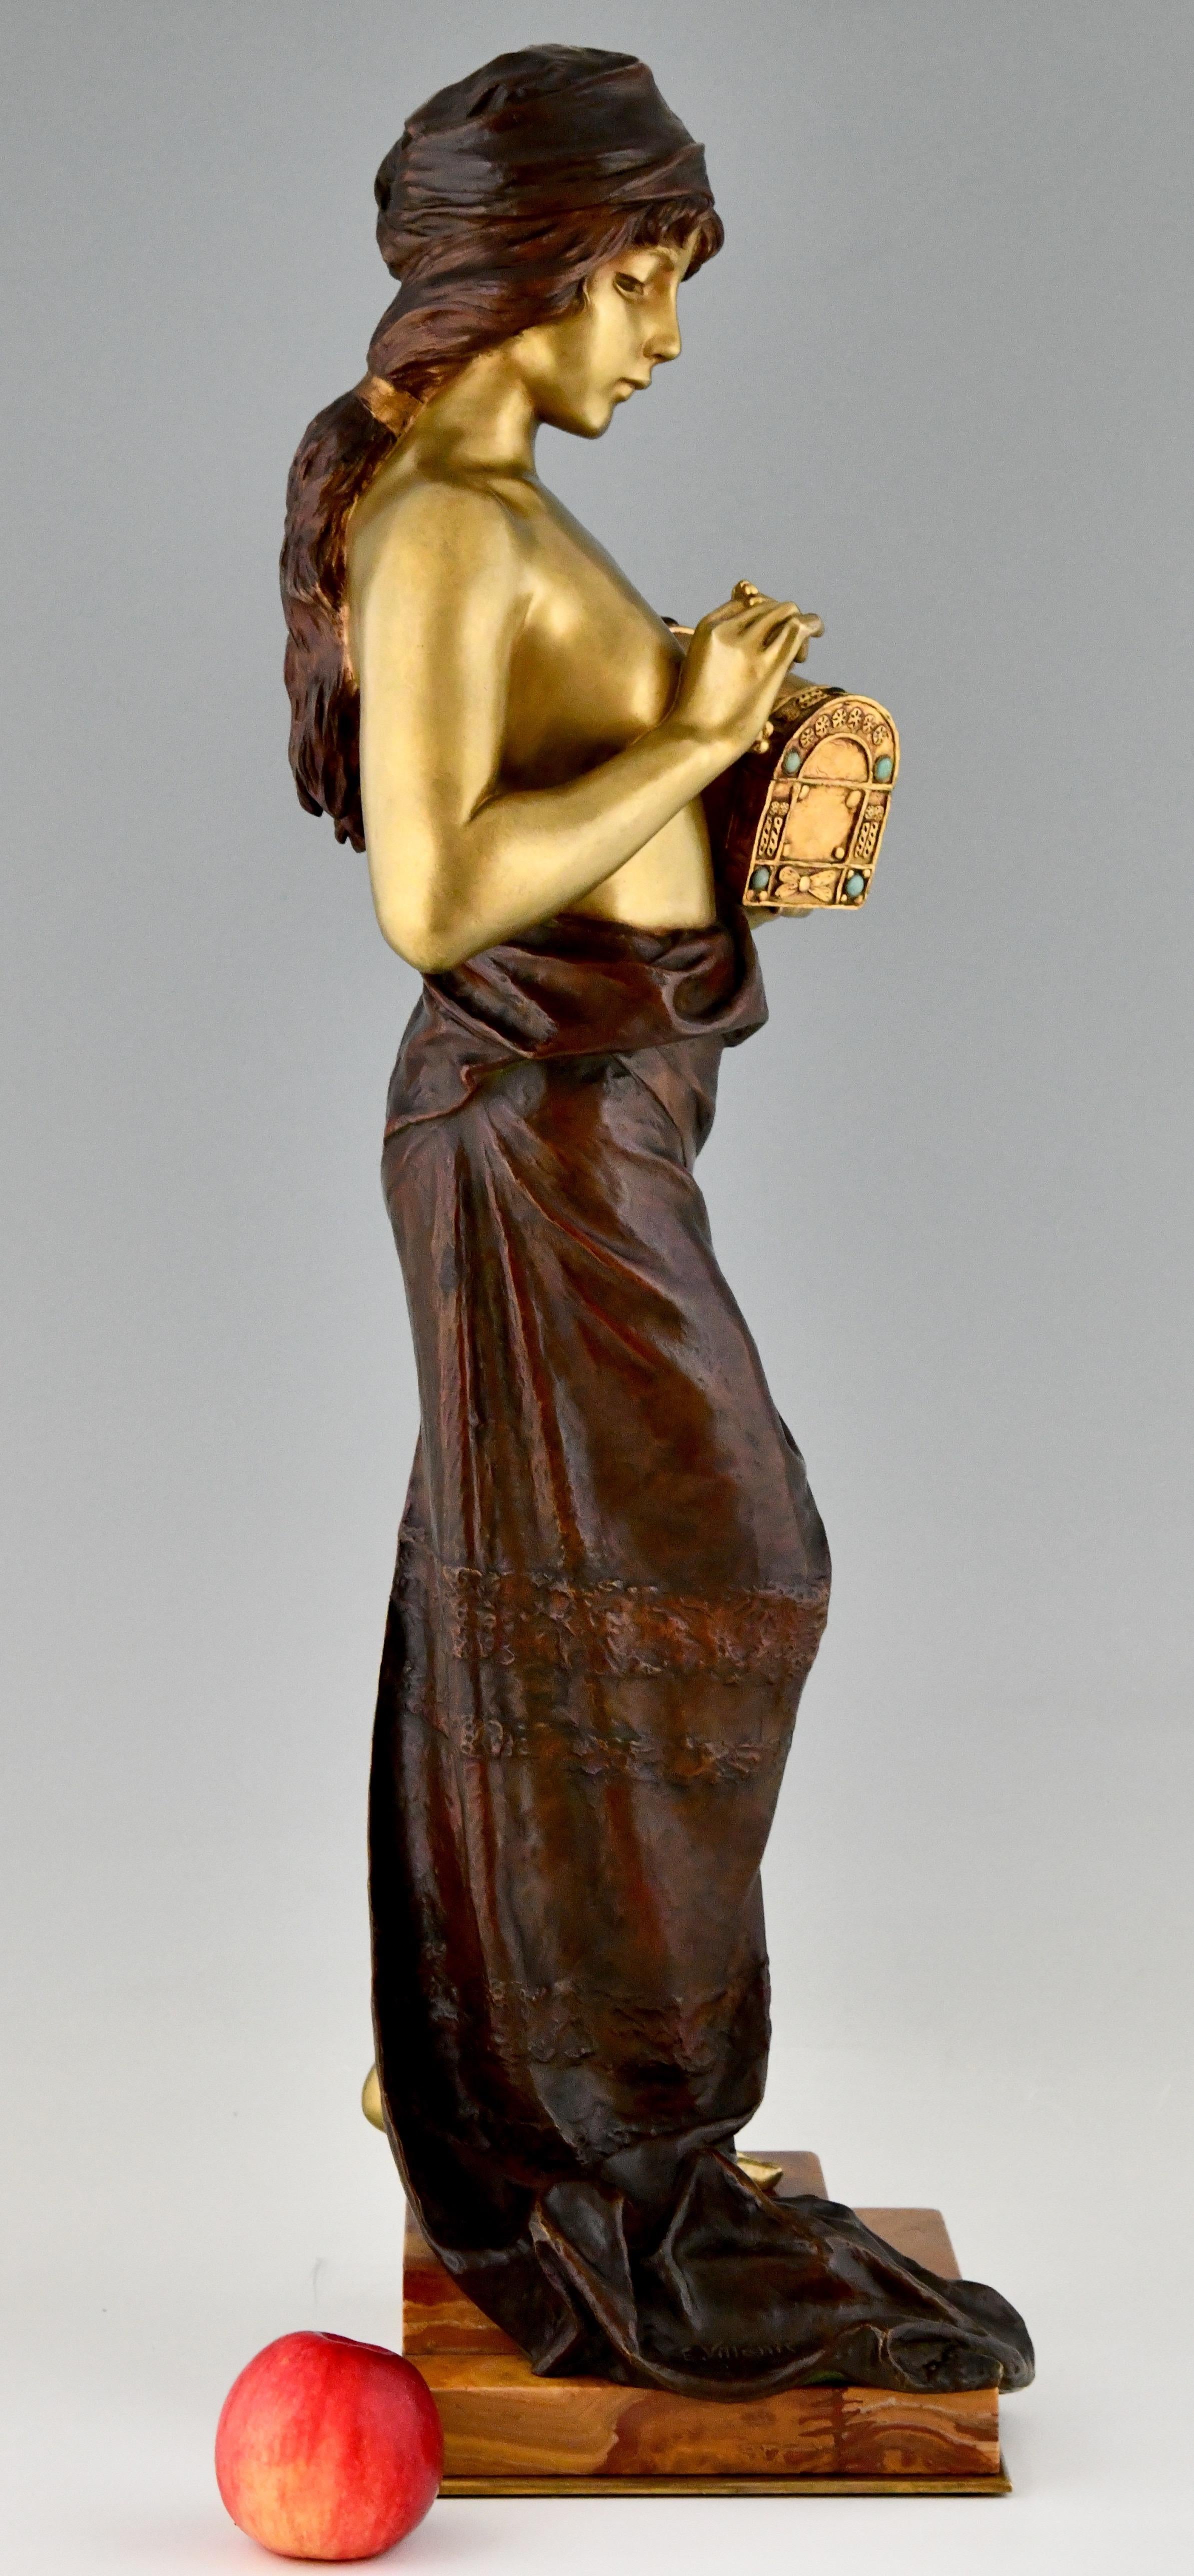 Early 20th Century Art Nouveau Bronze Sculpture Standing Lady with Jewelry Casket E. Villanis 1900